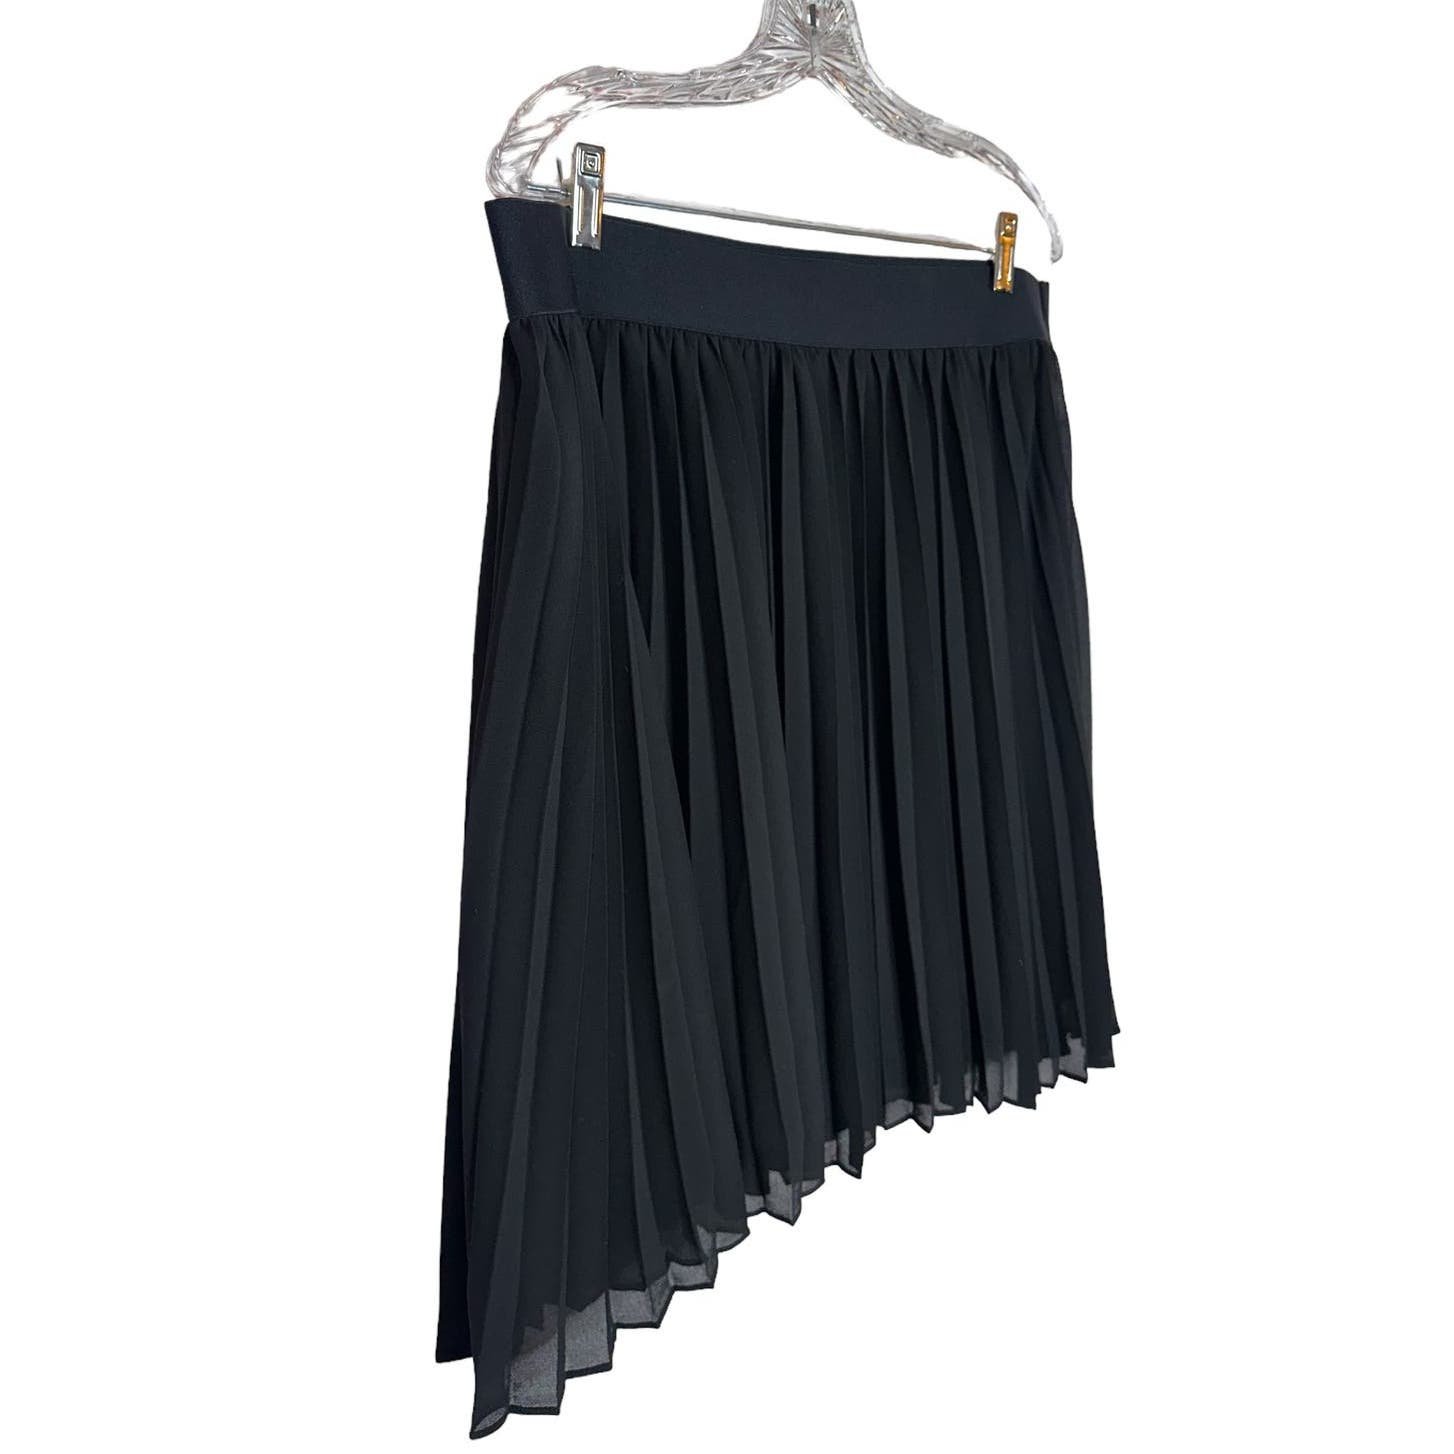 Wholesale price Torrid Chiffon Black Pleated Elastic Waist Mini Skirt Size 2XL 18/20 JaVdfBTRJ Buying Cheap